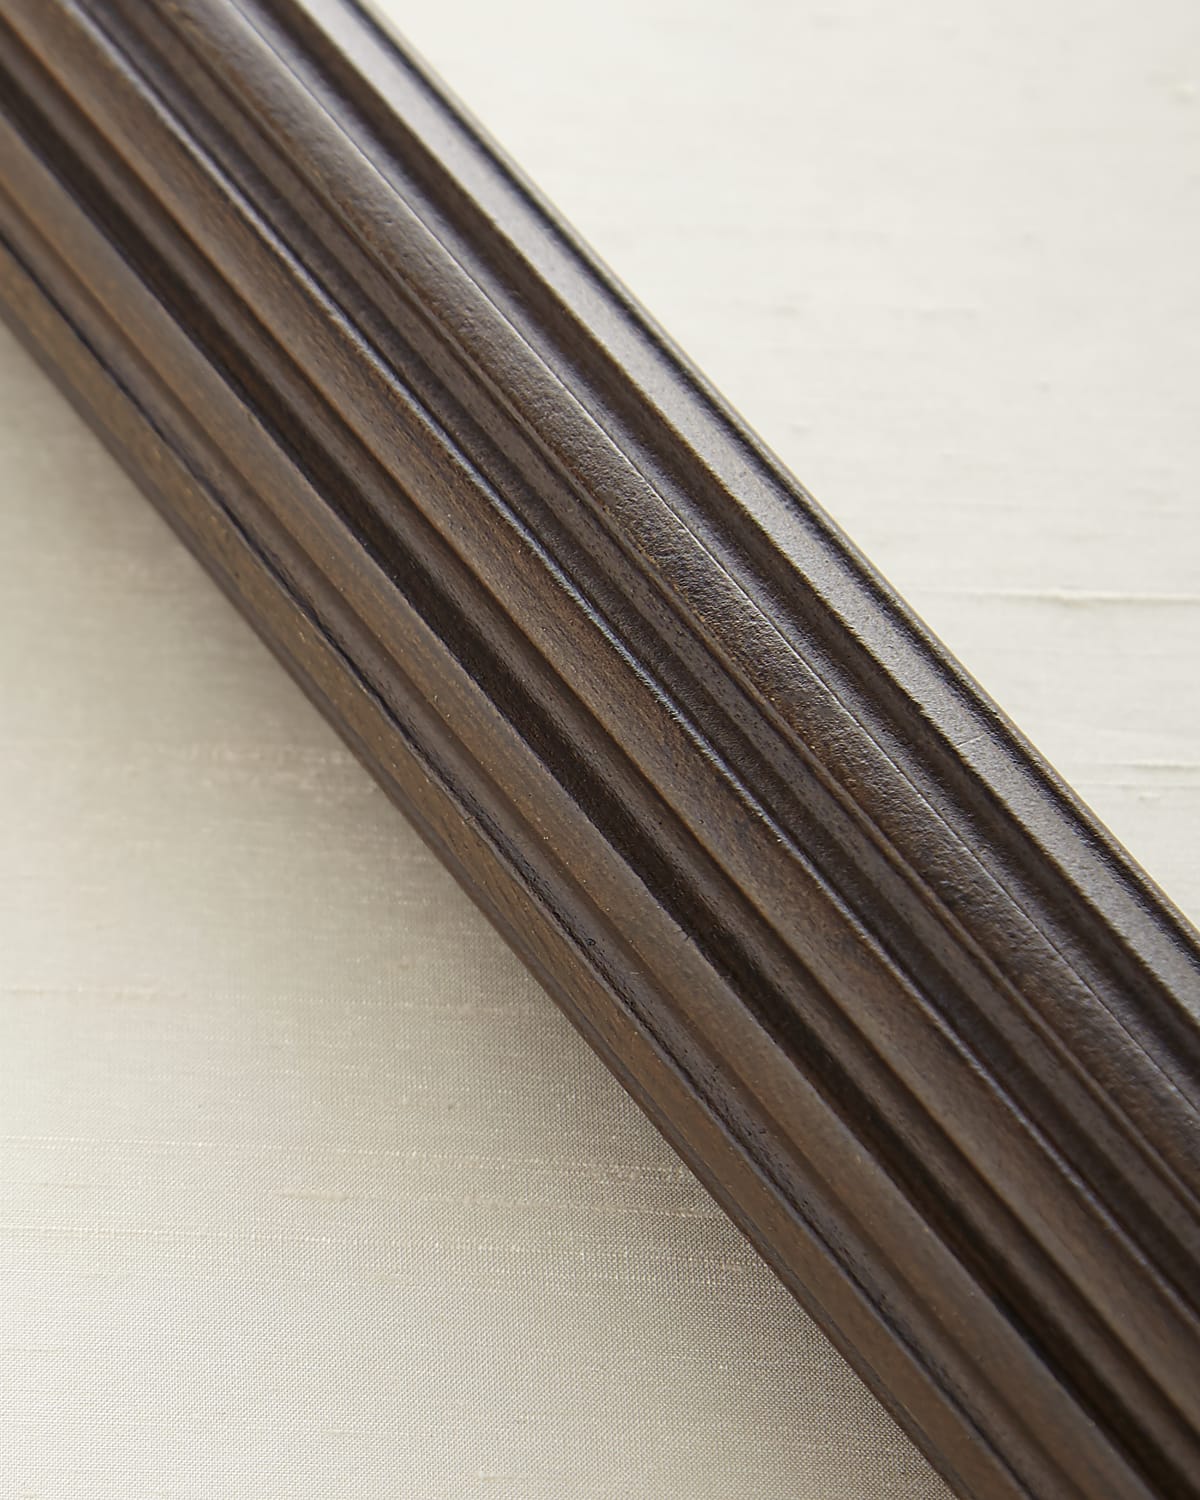 Image 8'L Fluted Wood Drapery Rod